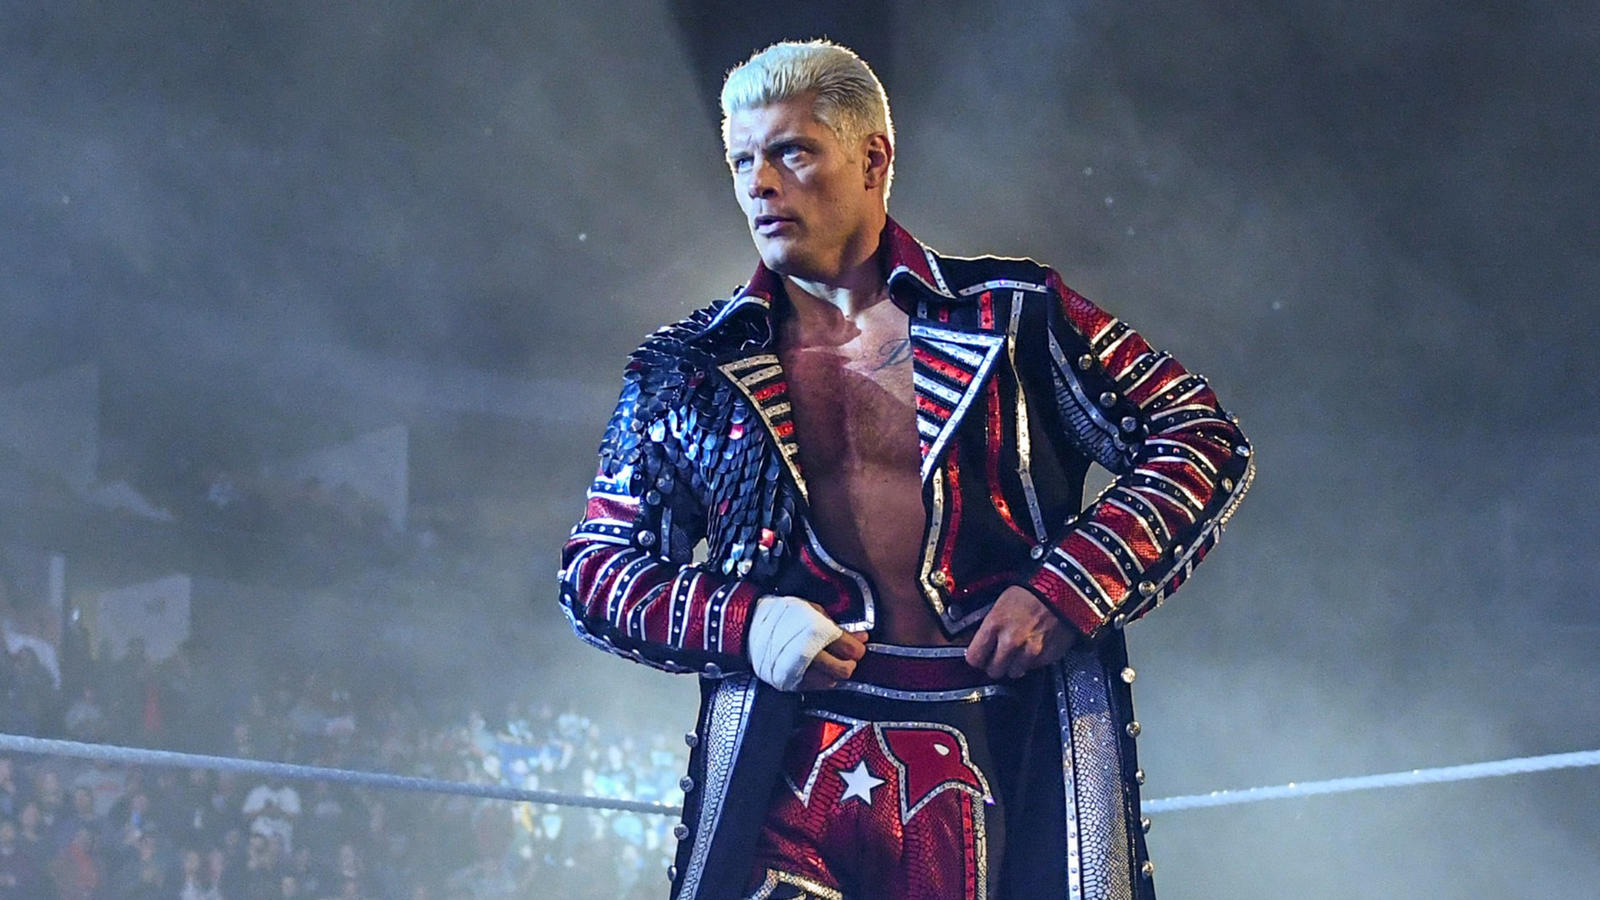 Плейлист: Все матчи Коди Роудса после возвращения в WWE